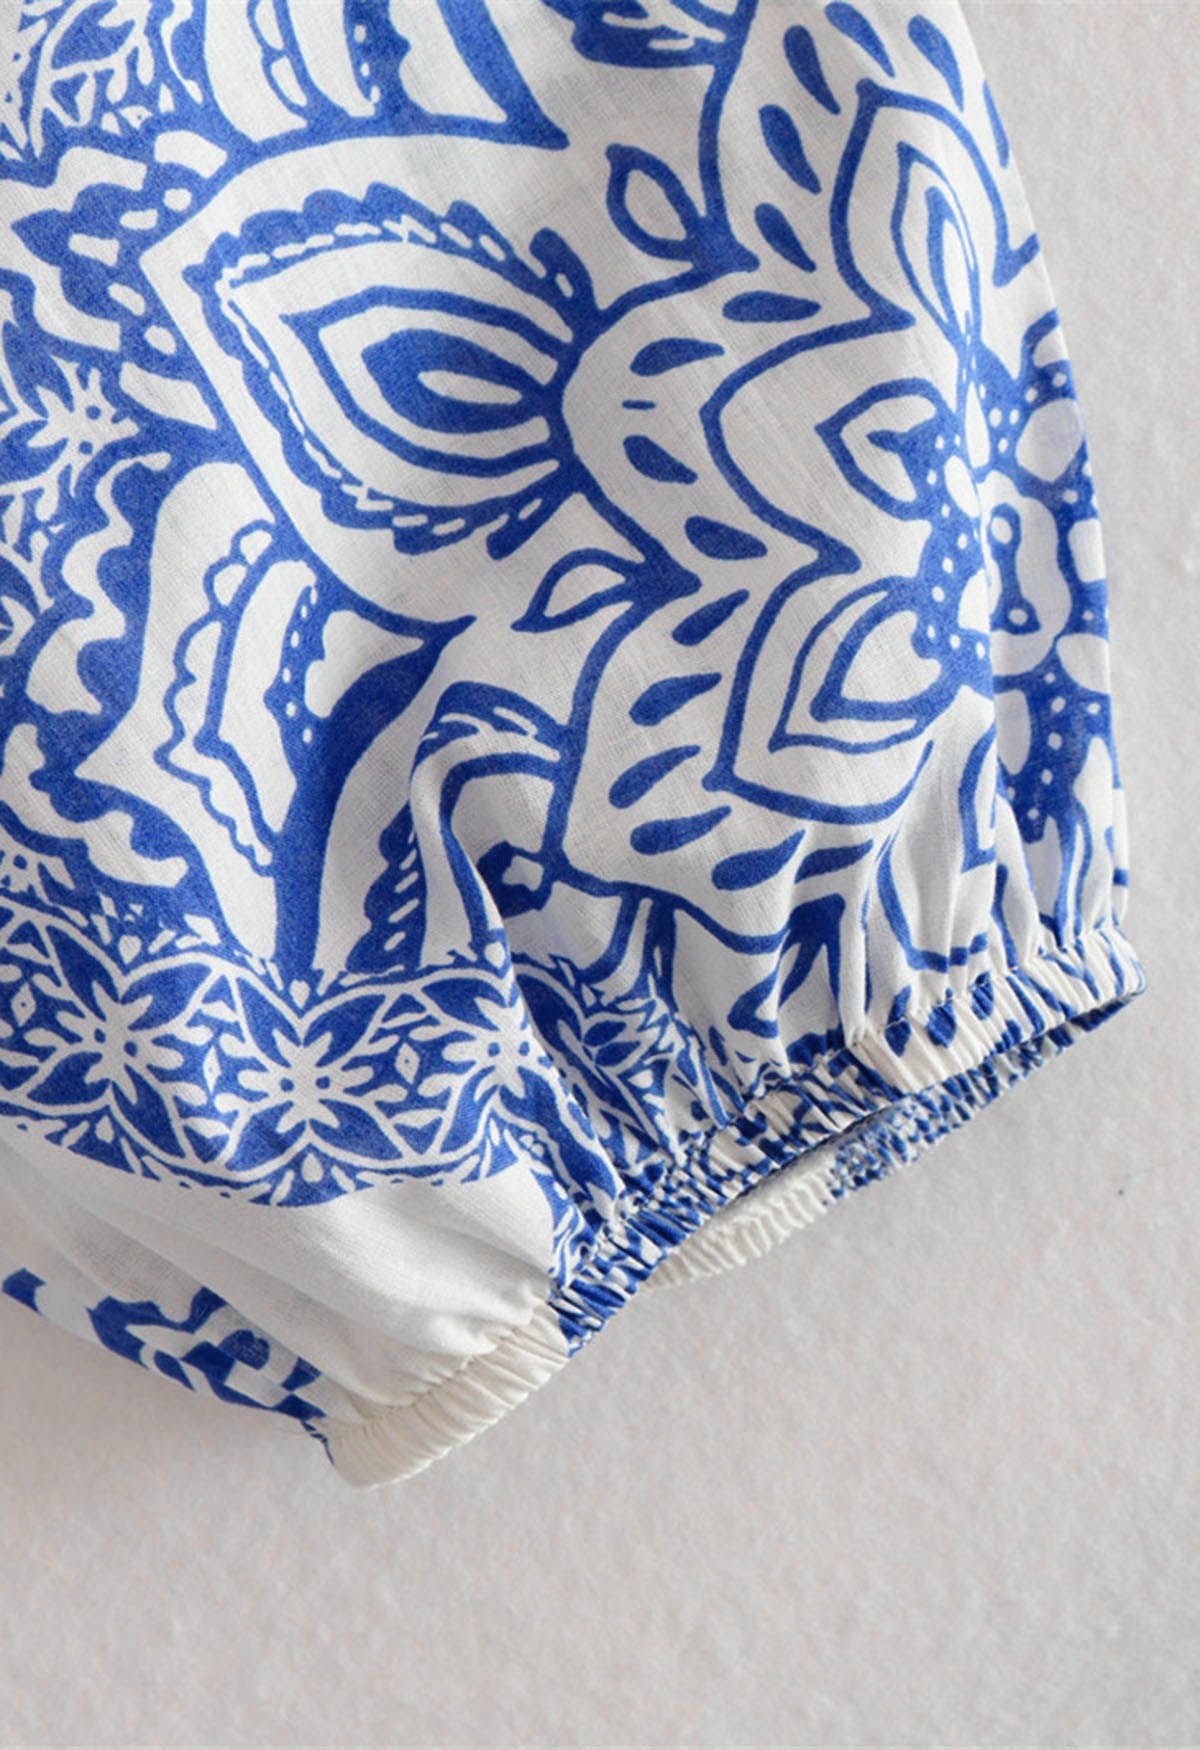 Blue Floral Printed Tie Waist Mini Dress